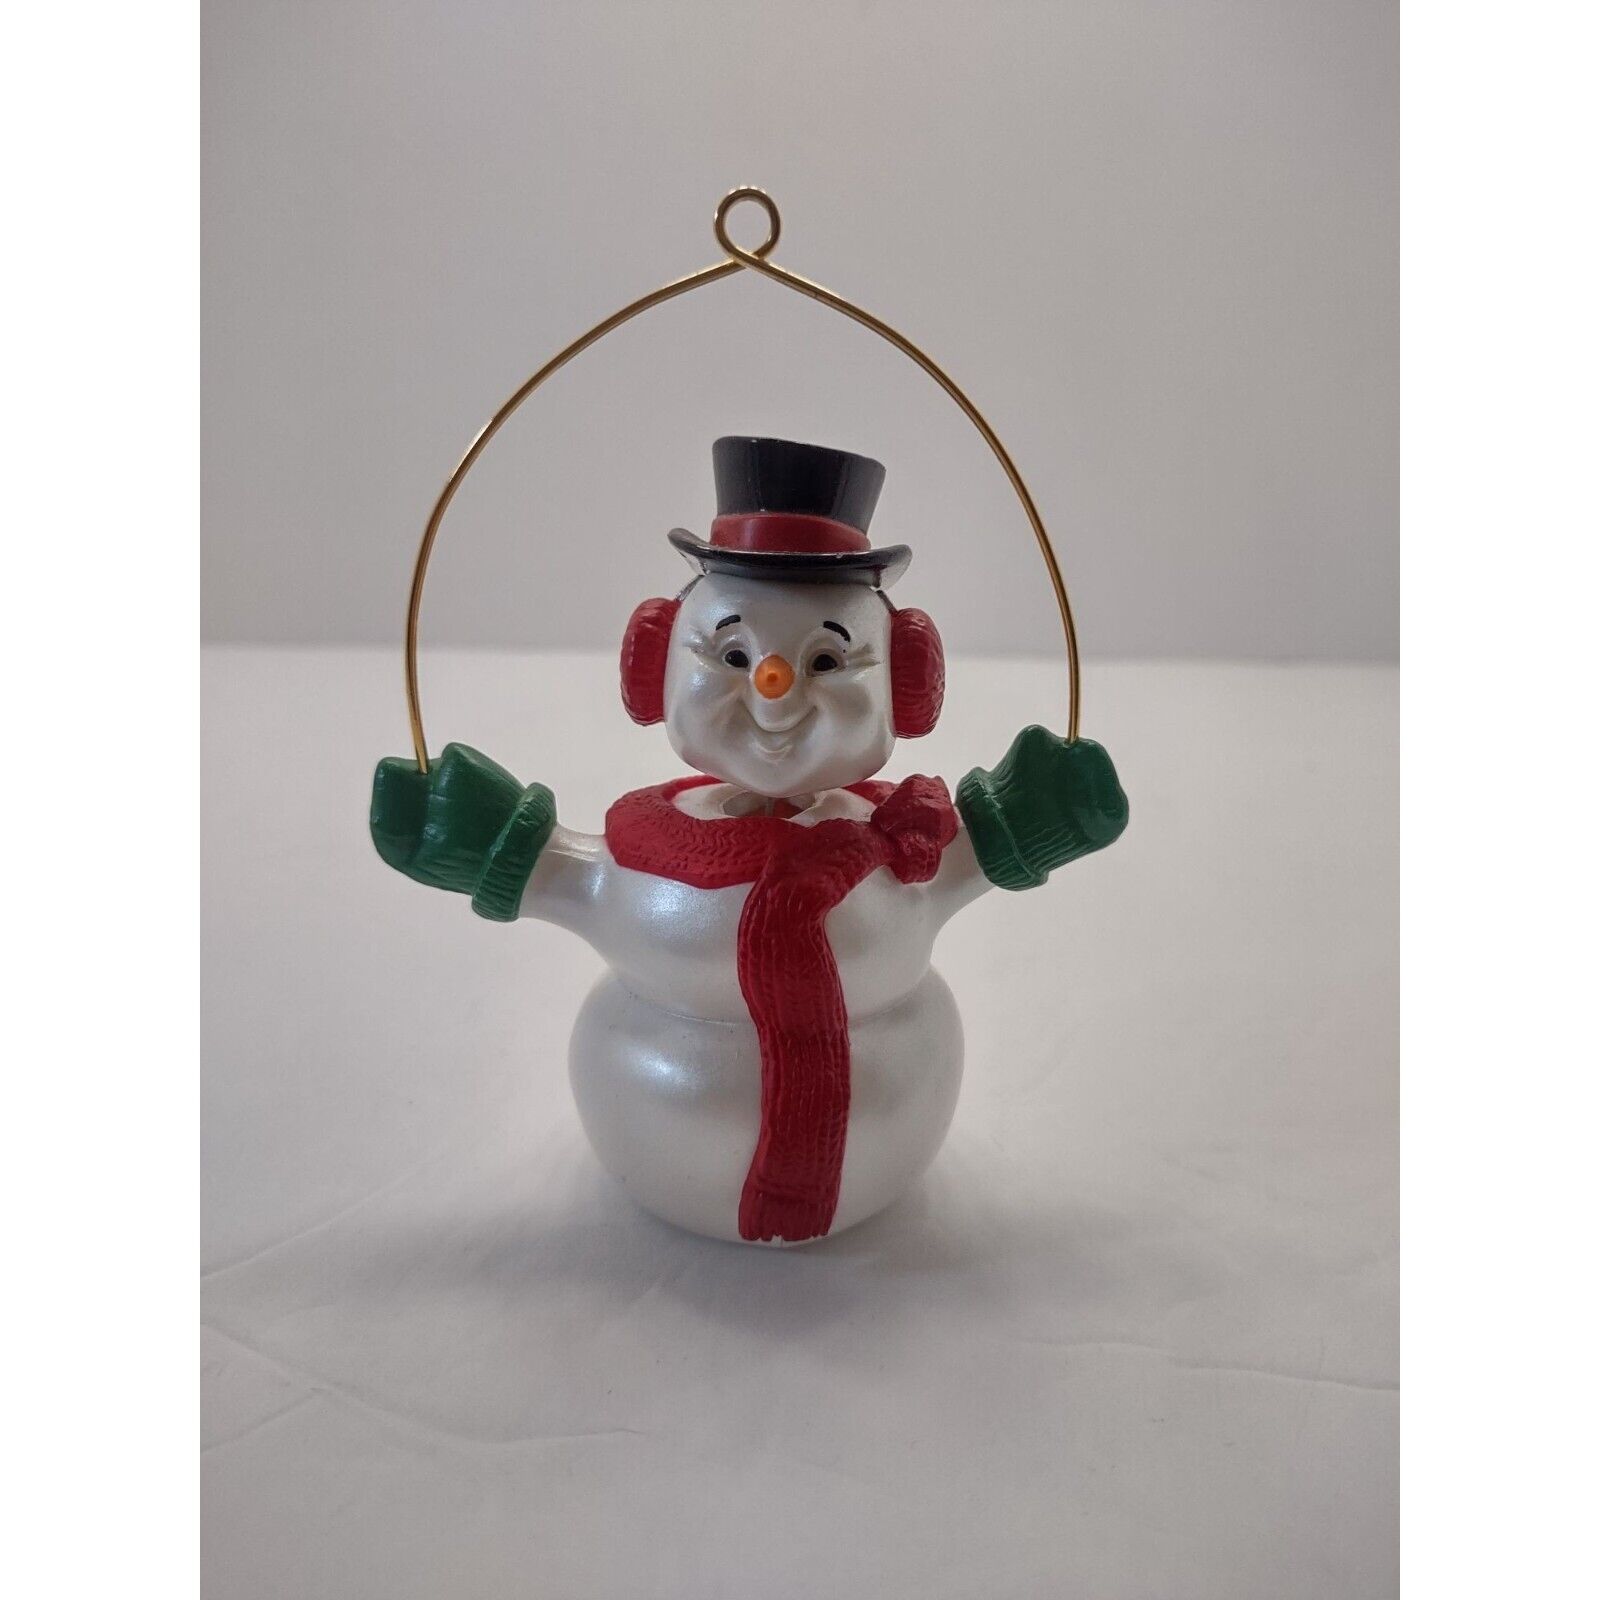 Vintage Hallmark keepsake 1989 WIGGLY SNOWMAN Movement Christmas ornament